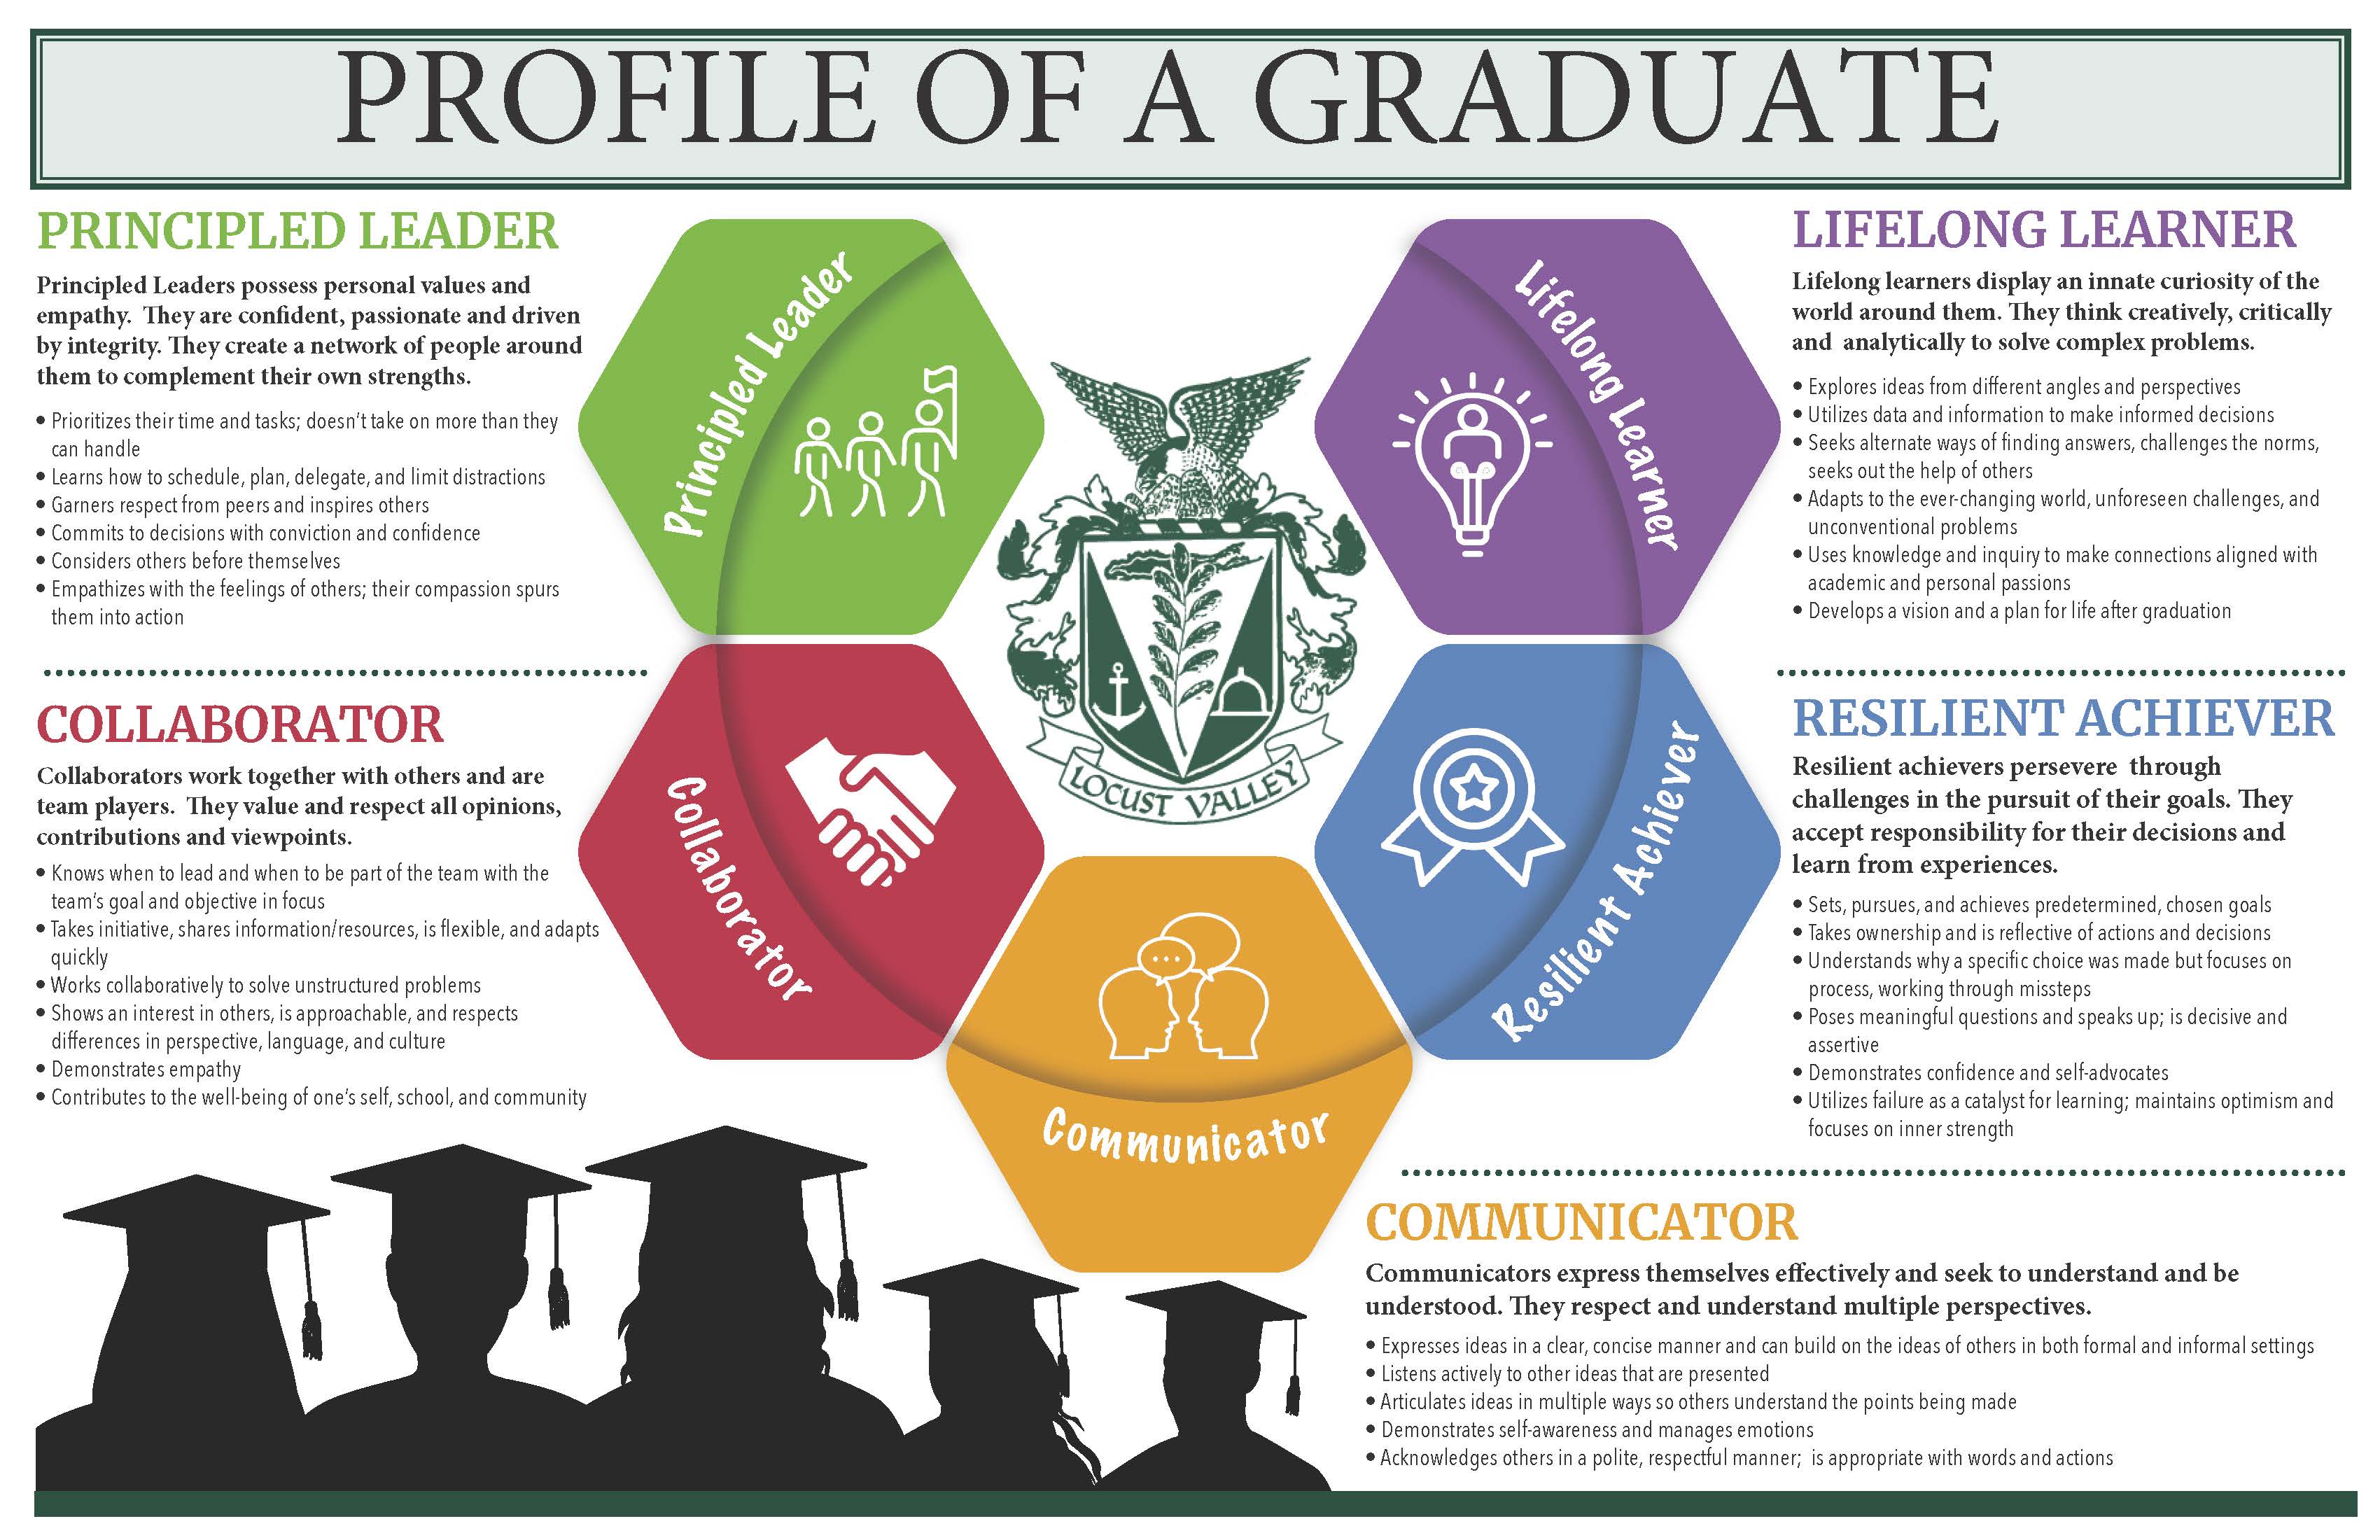 LV Profile of a Graduate